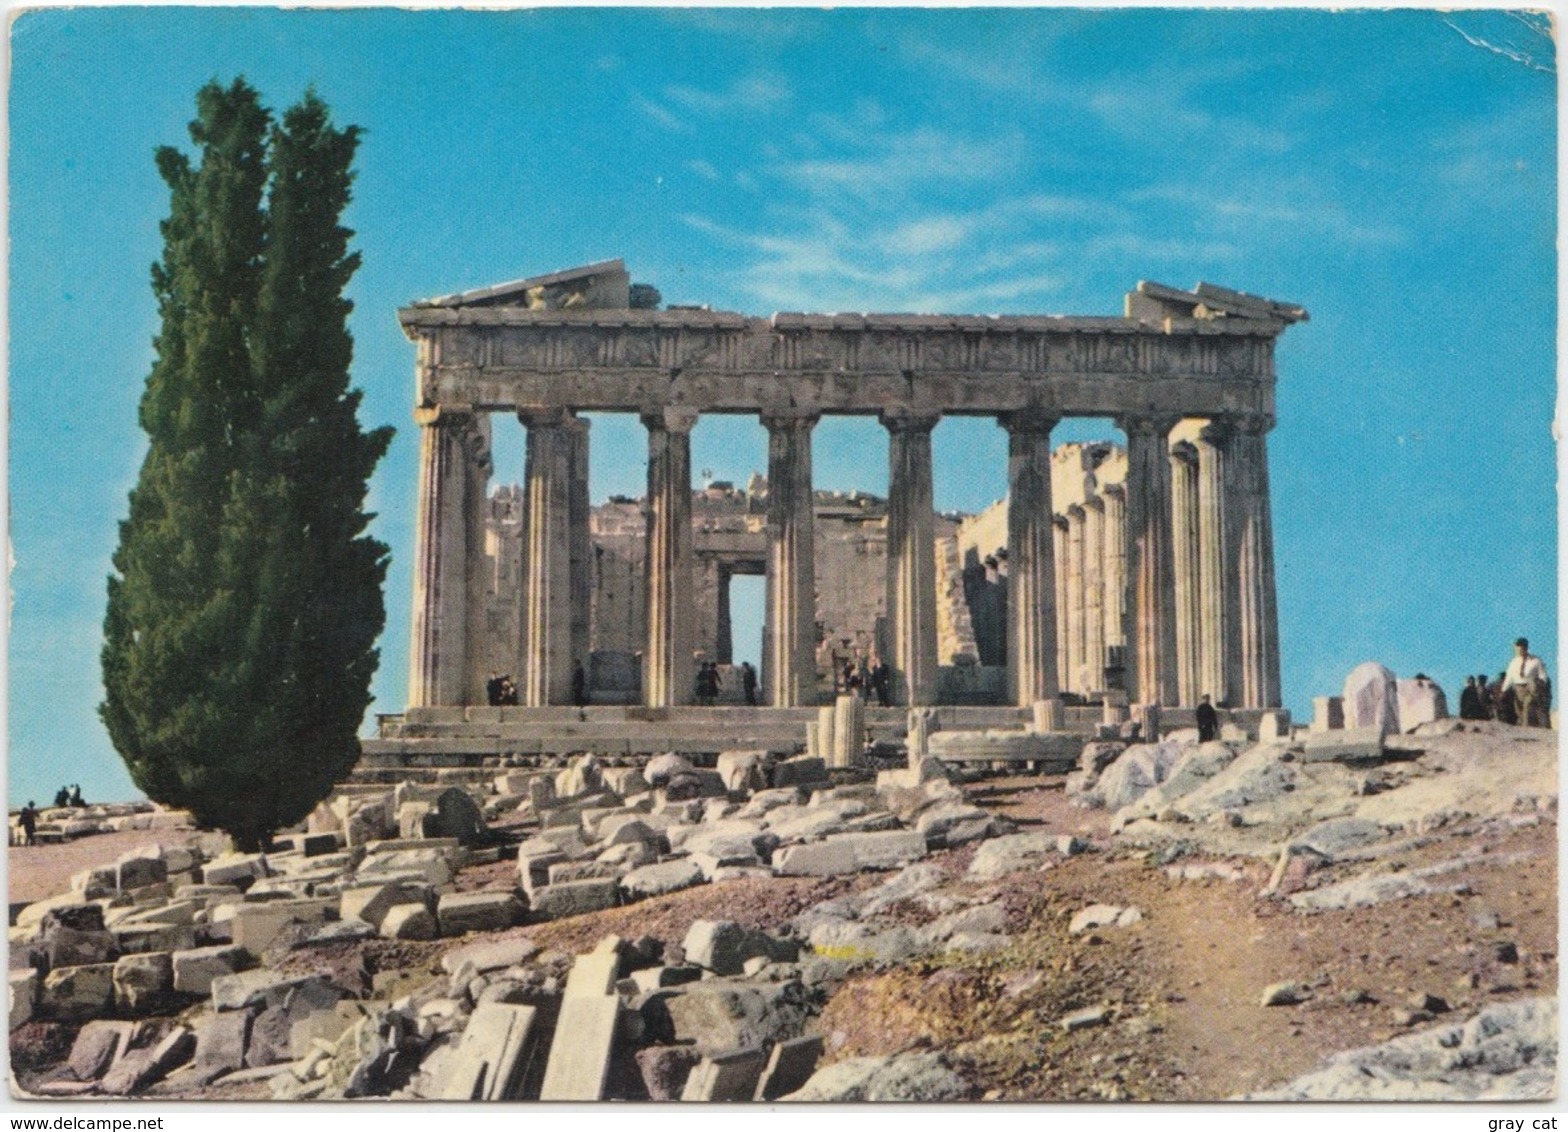 Greece, Athens, The Parthenon, 1967 Used Postcard [21248] - Greece